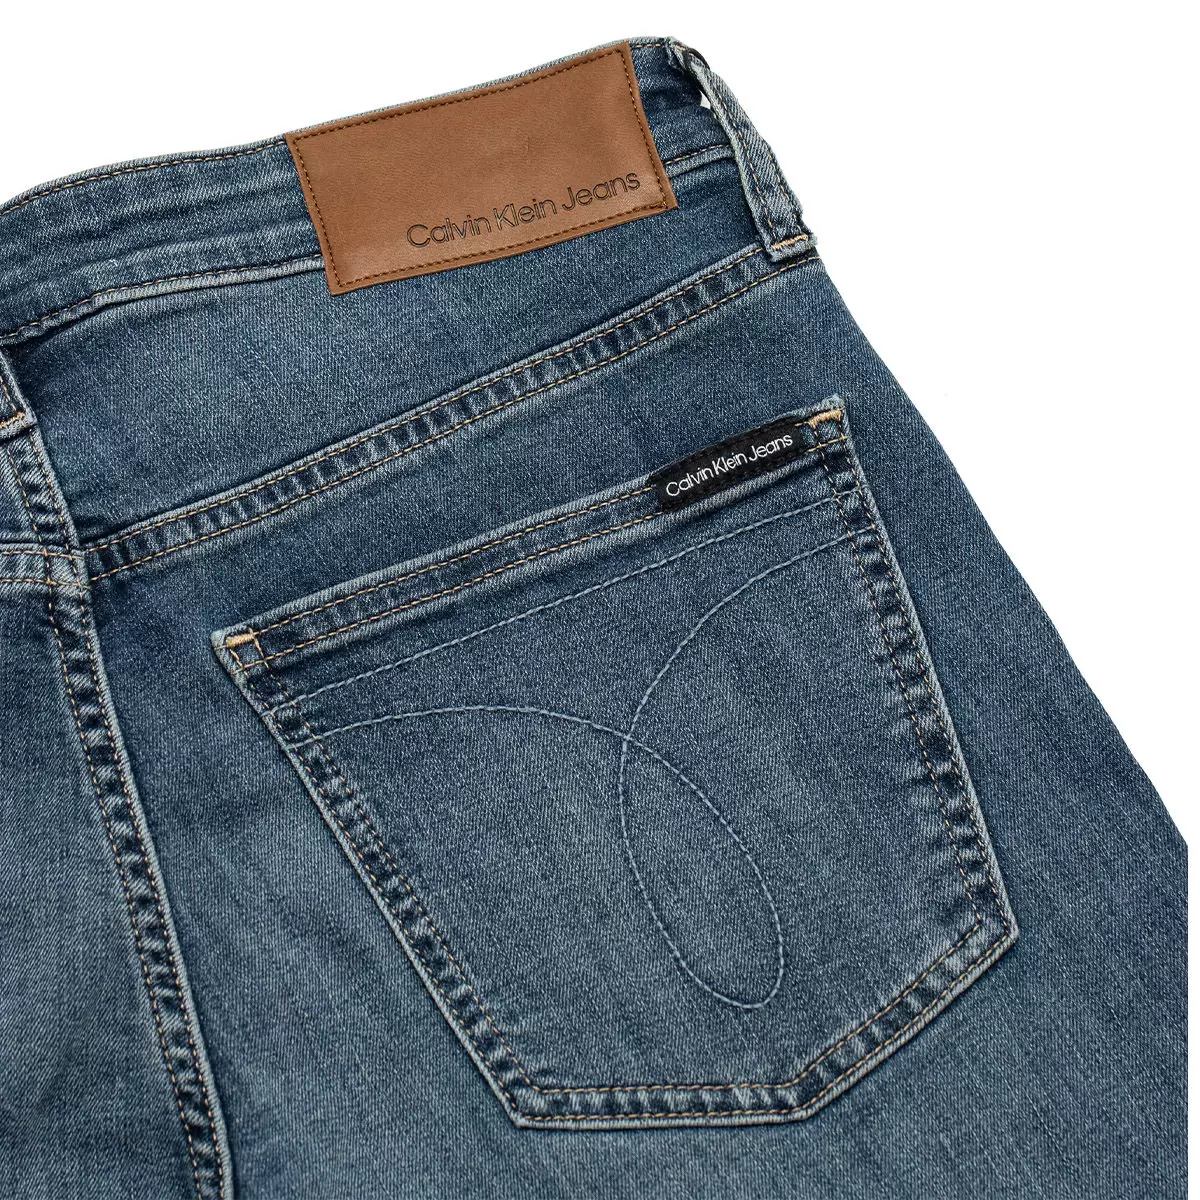 Calvin Klein Jeans 男彈性修身牛仔褲 腰圍 32吋 X 褲長 30吋